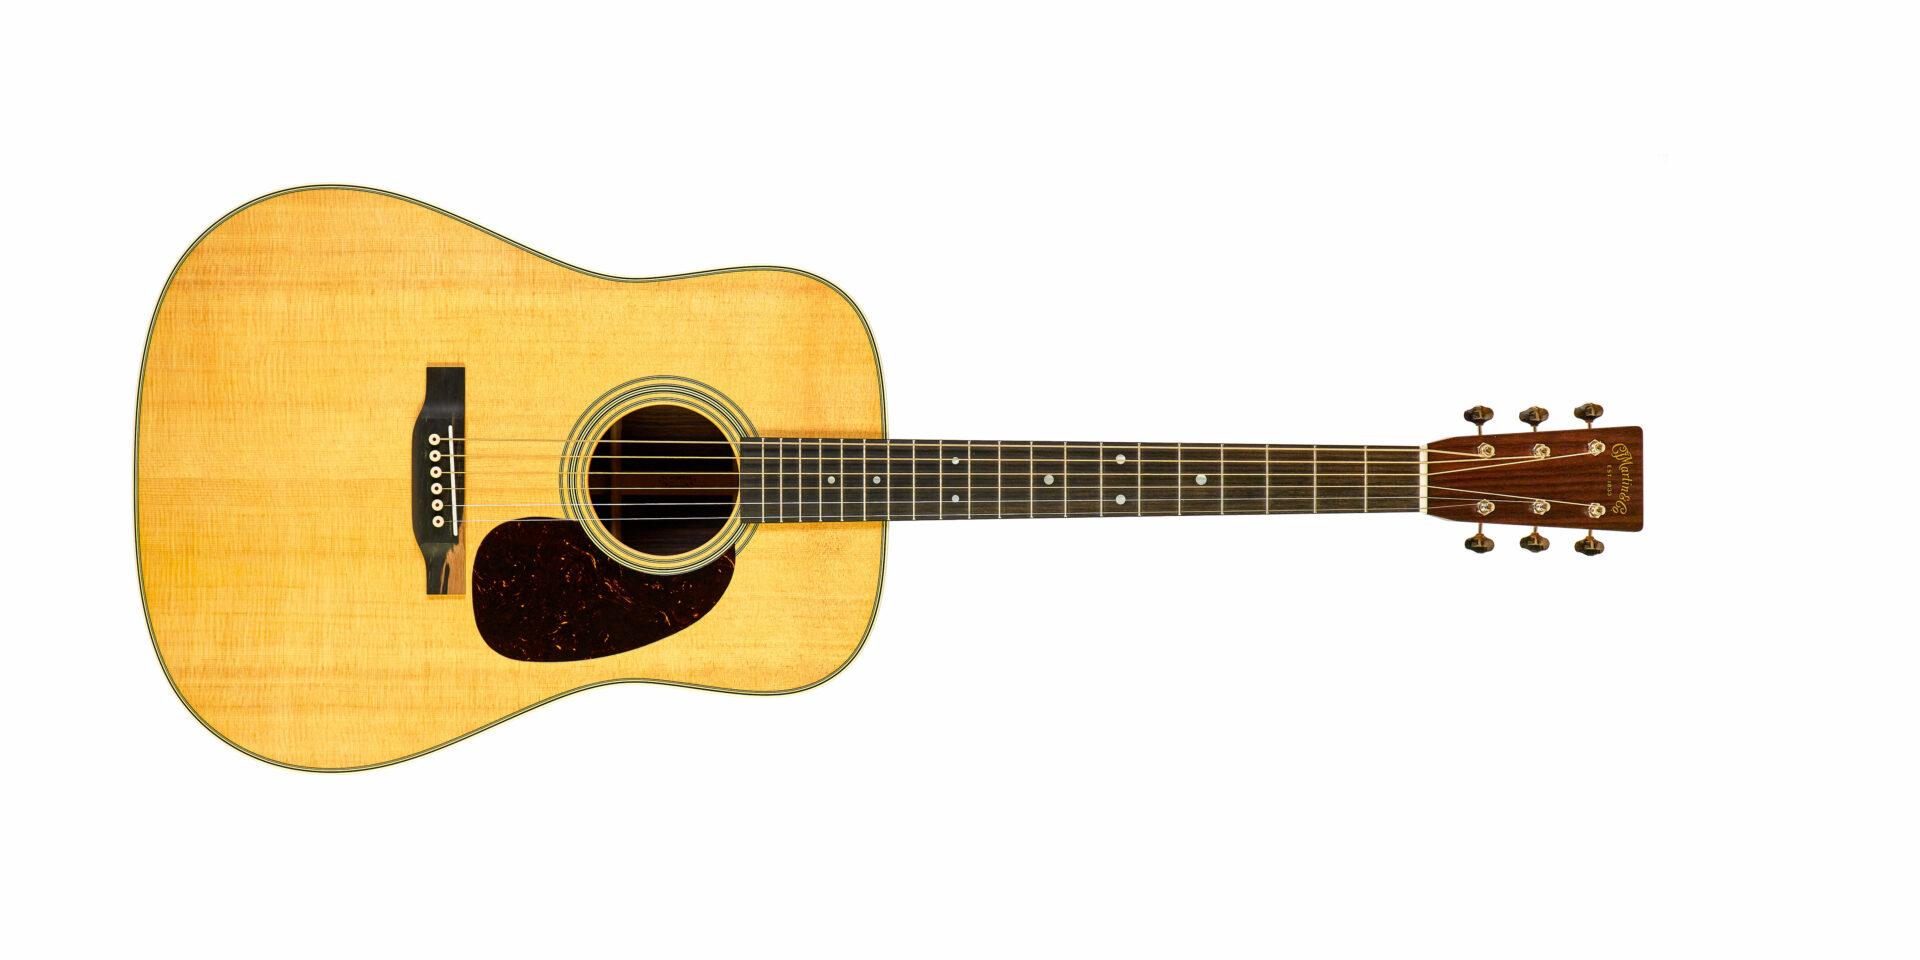 Martin D28 guitar